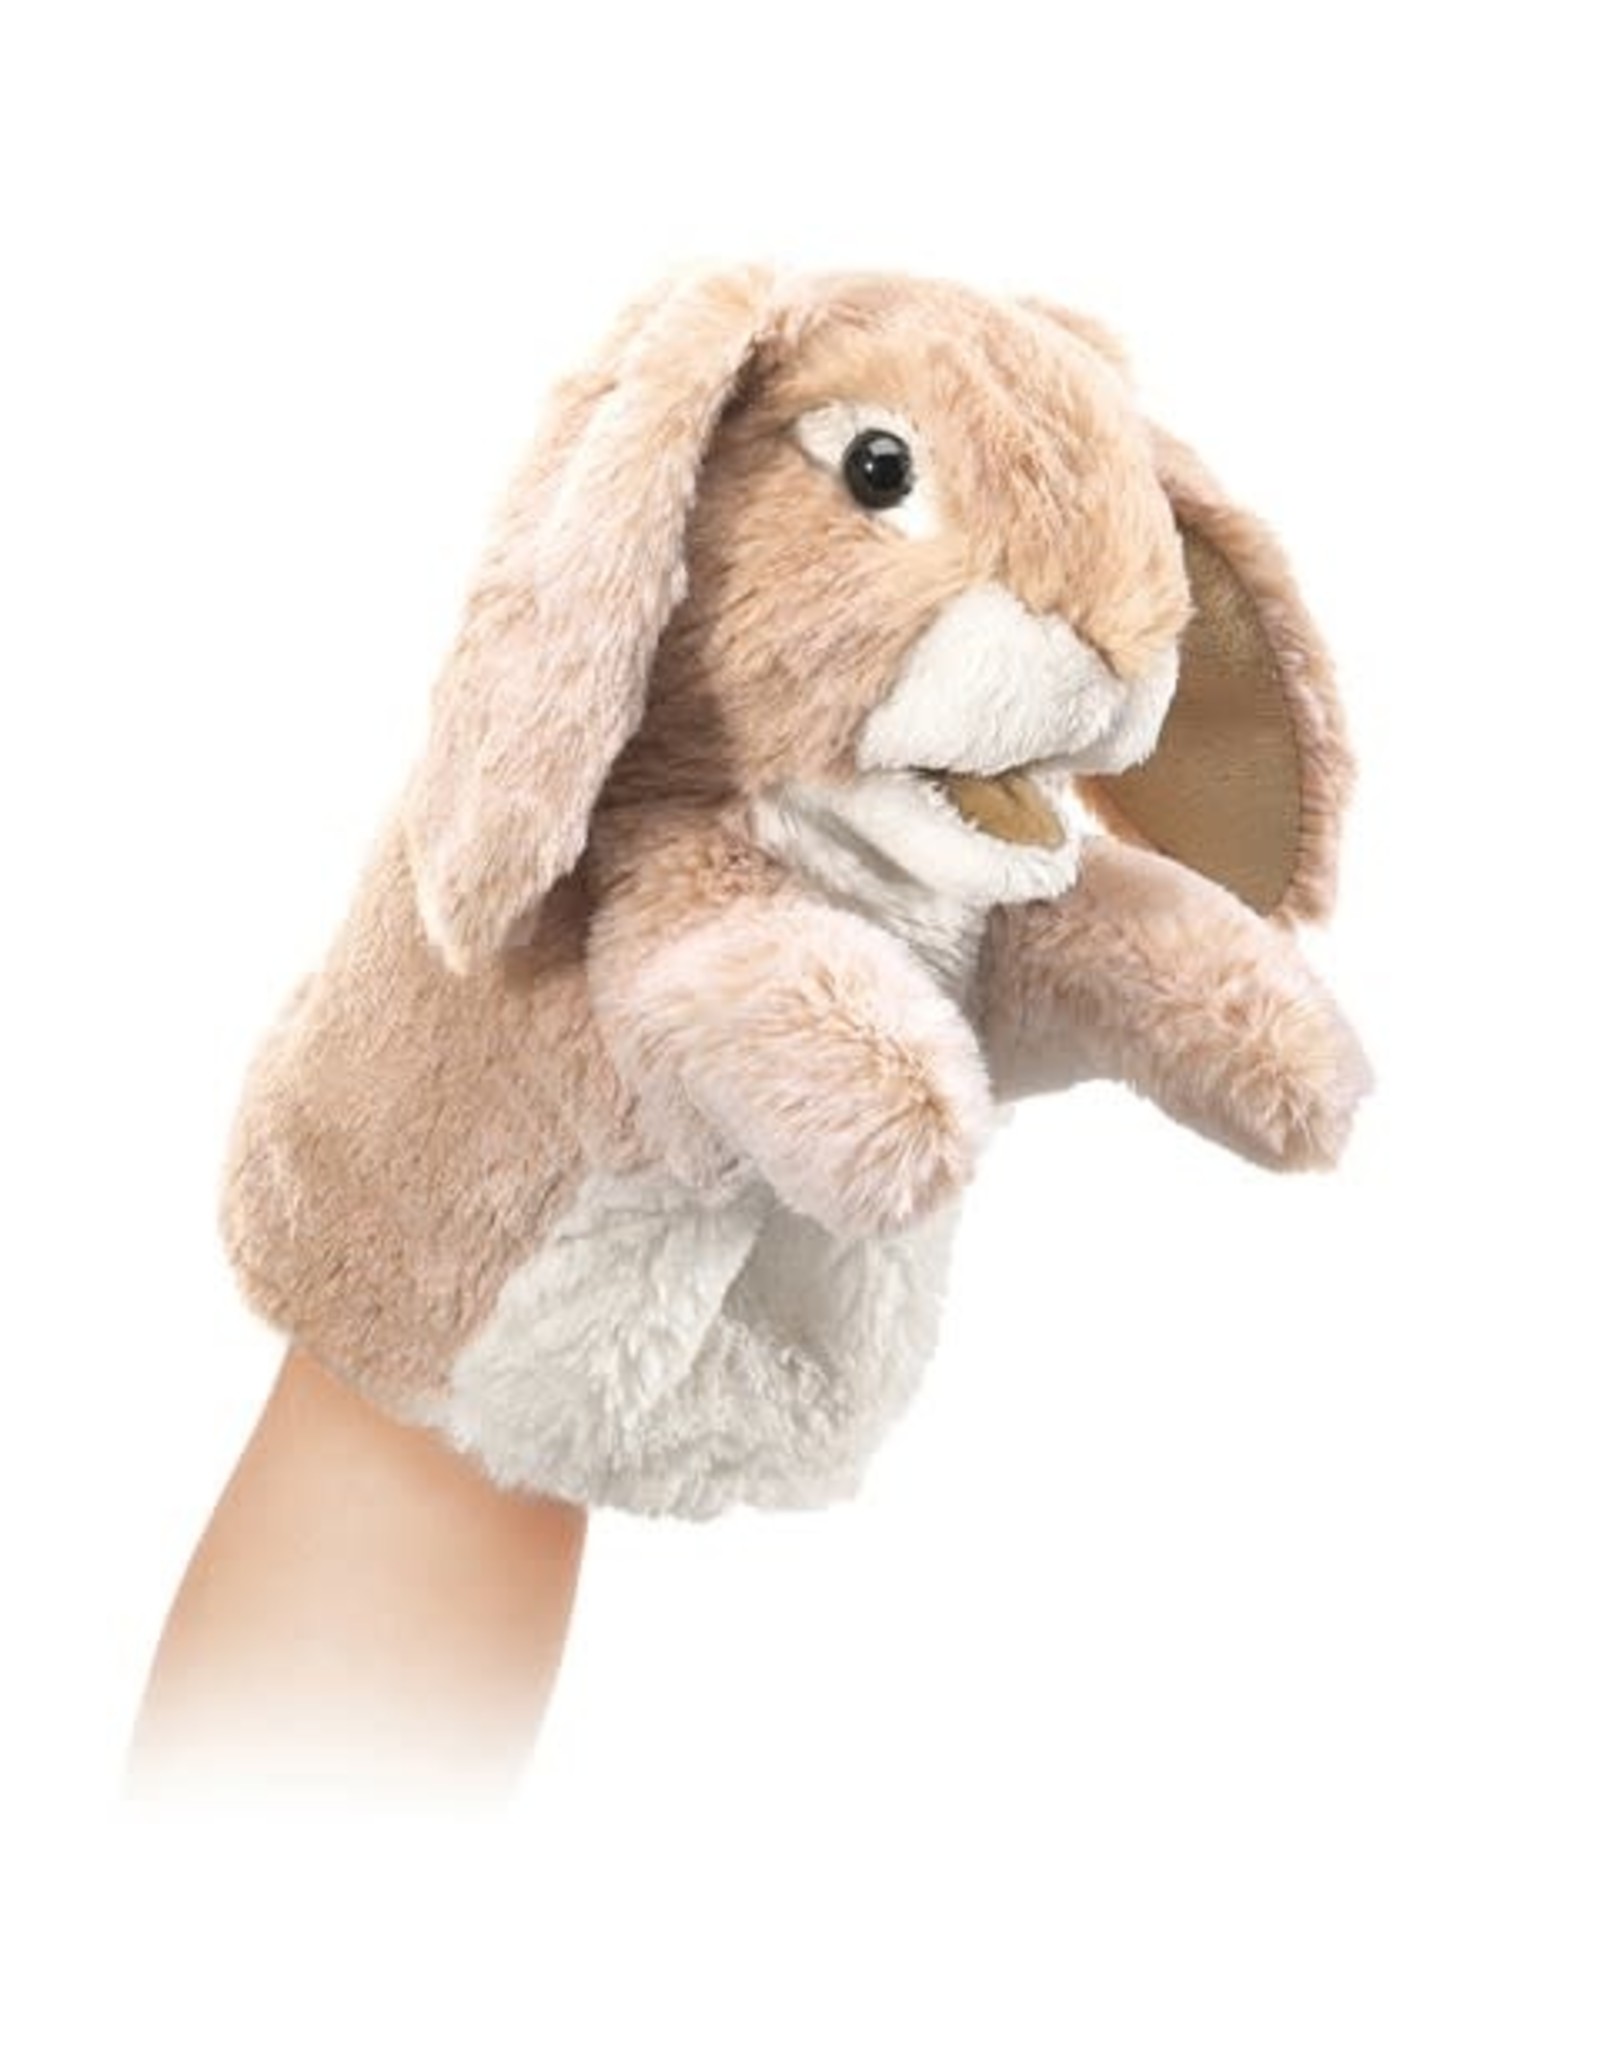 Folkmanis Folkmanis Little Lop Rabbit Puppet